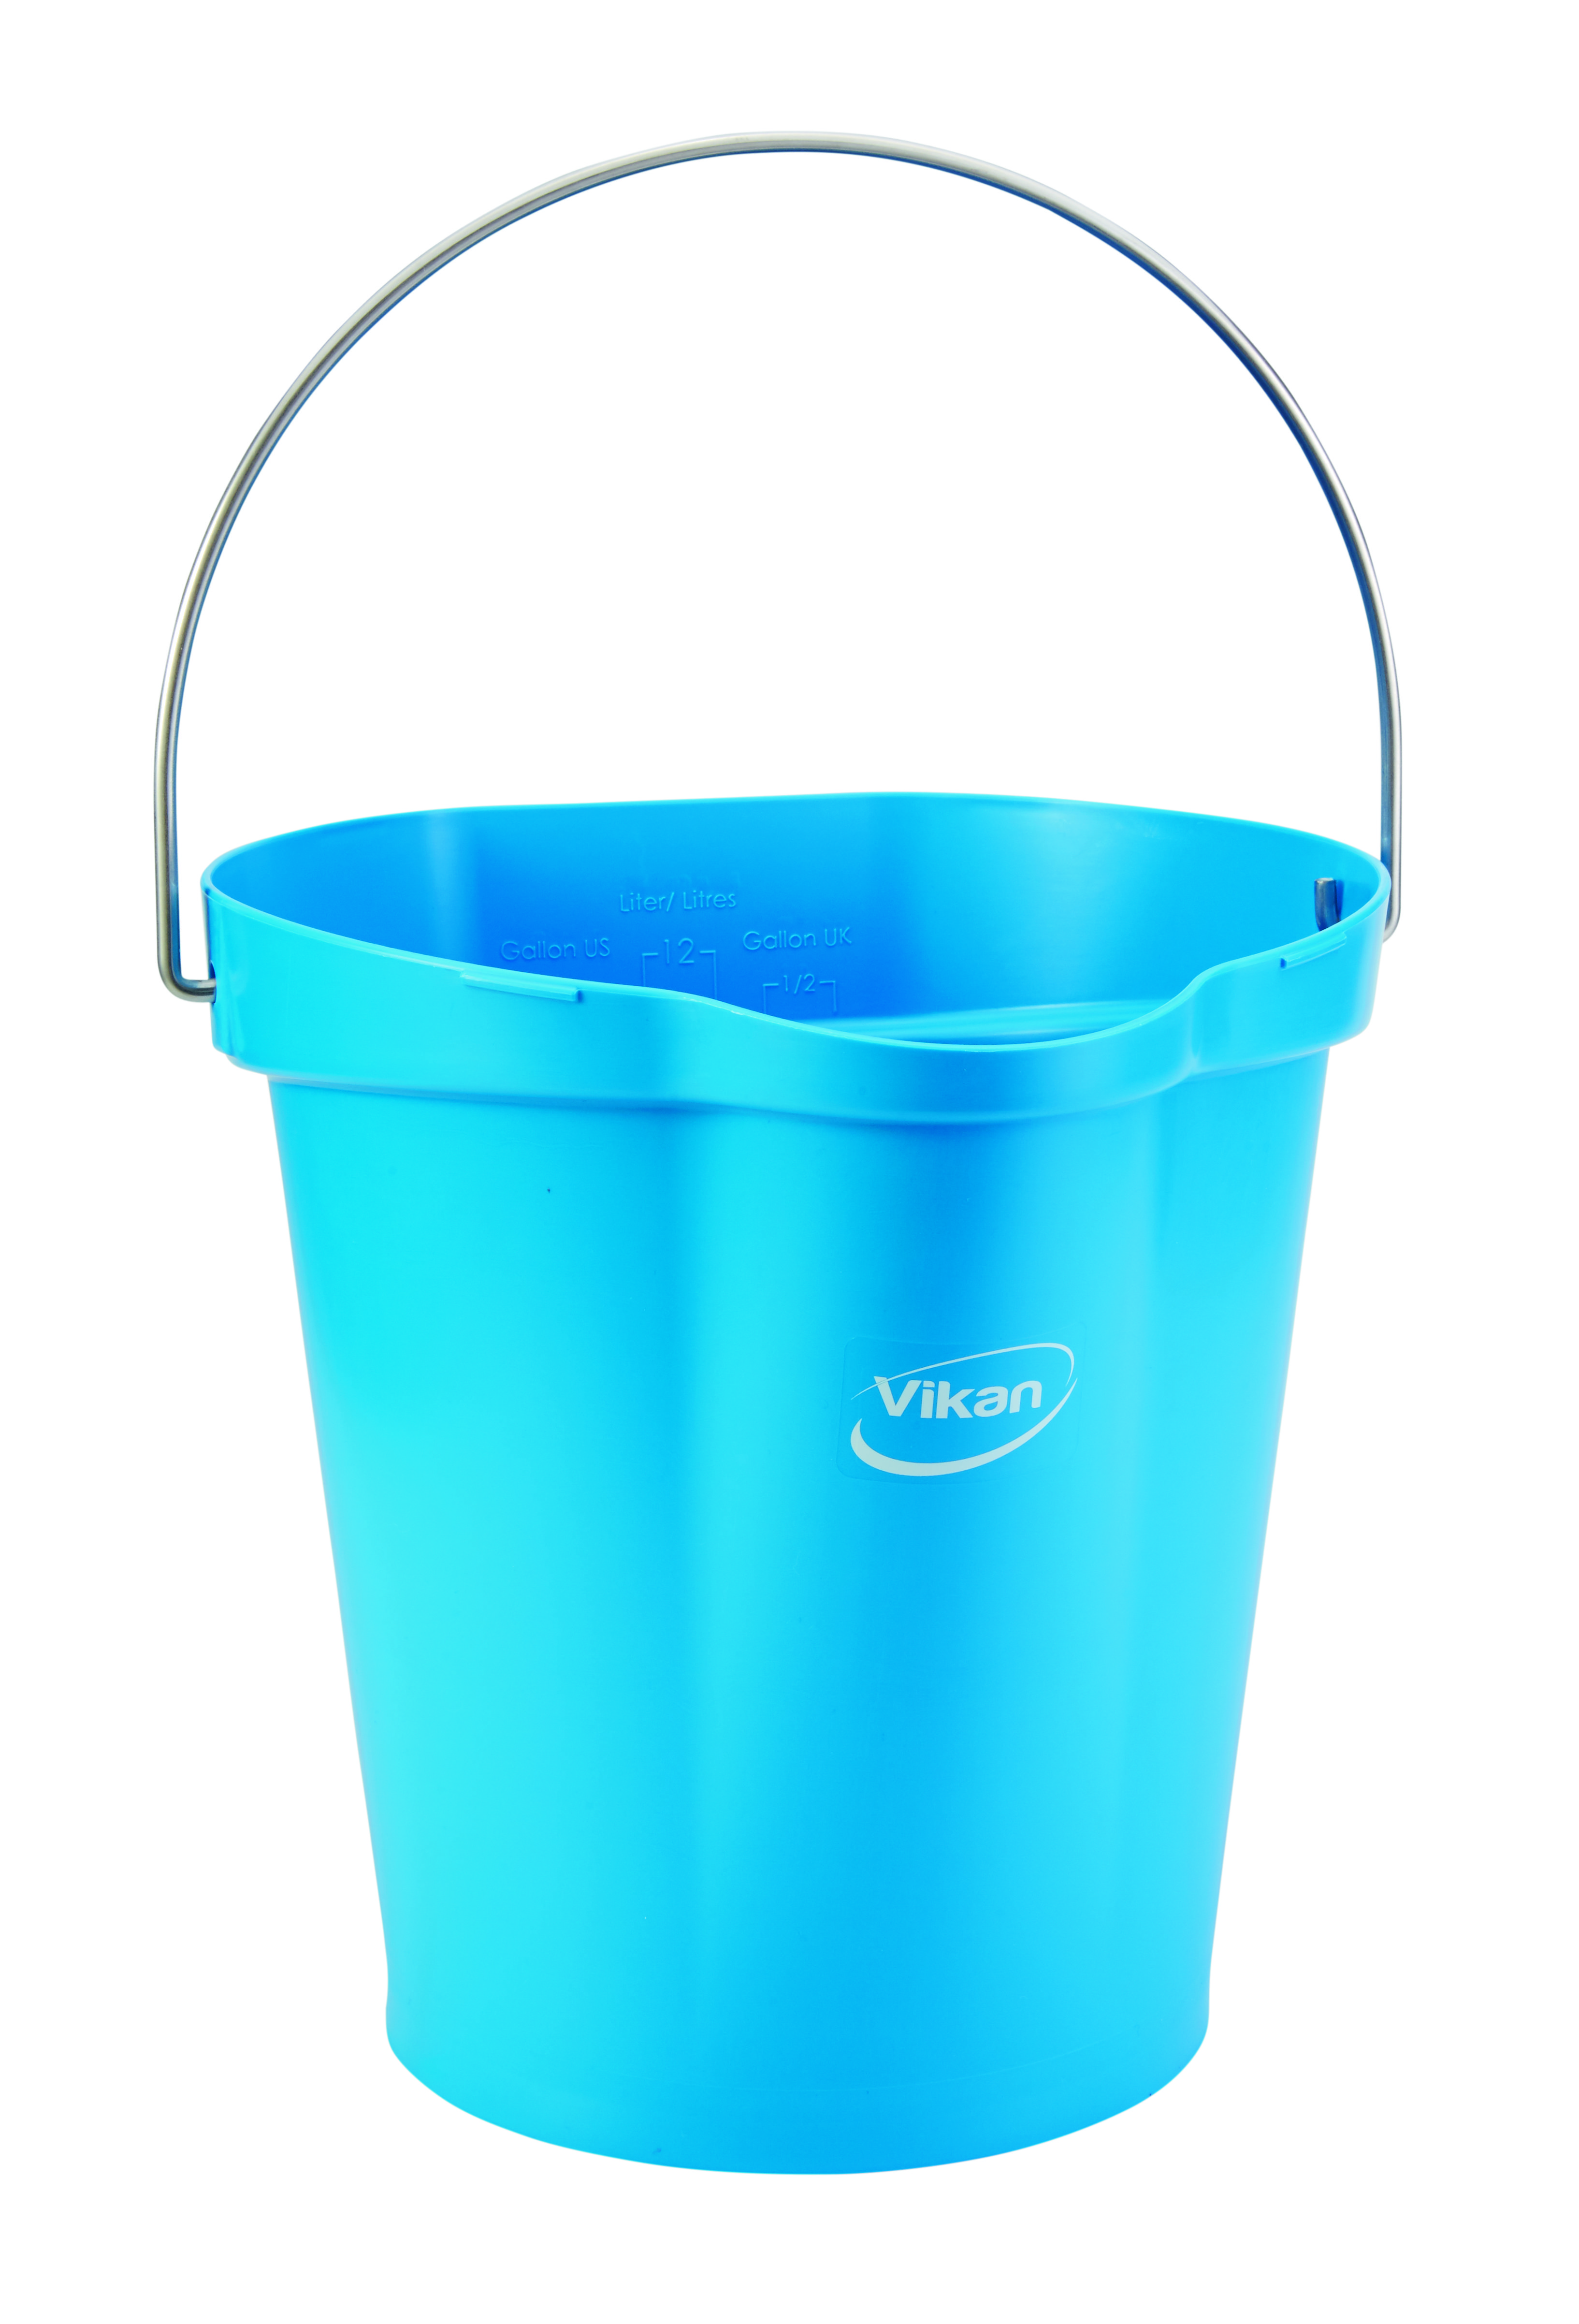 Vikan, Hygiene Bucket, 12 Litre - Blue